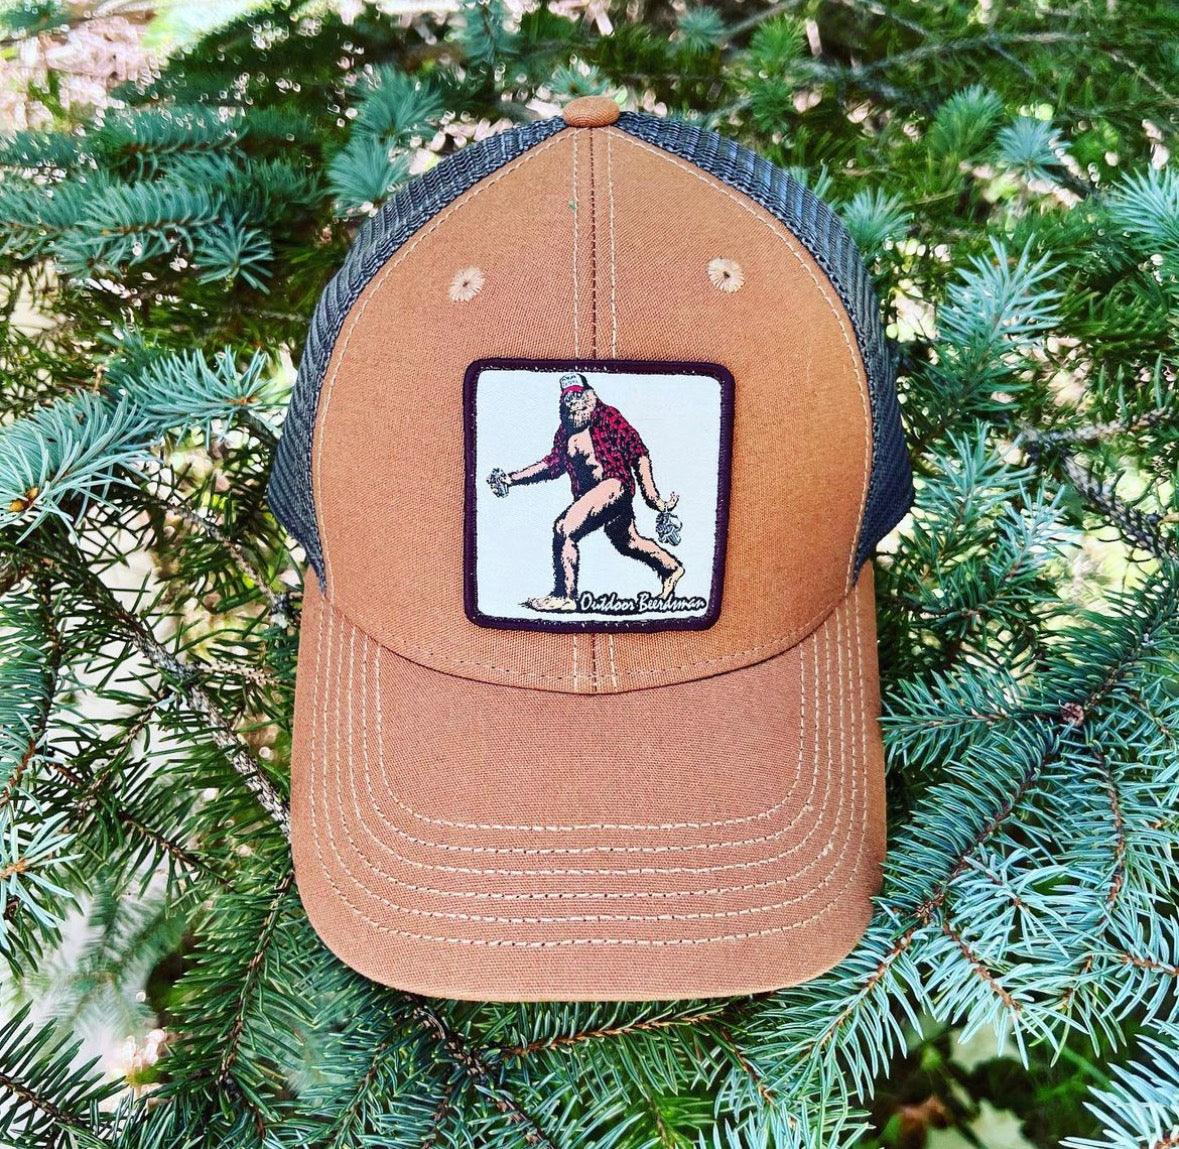 Men's Adventure Hat Outdoor Trucker Cap, White/Forest Green